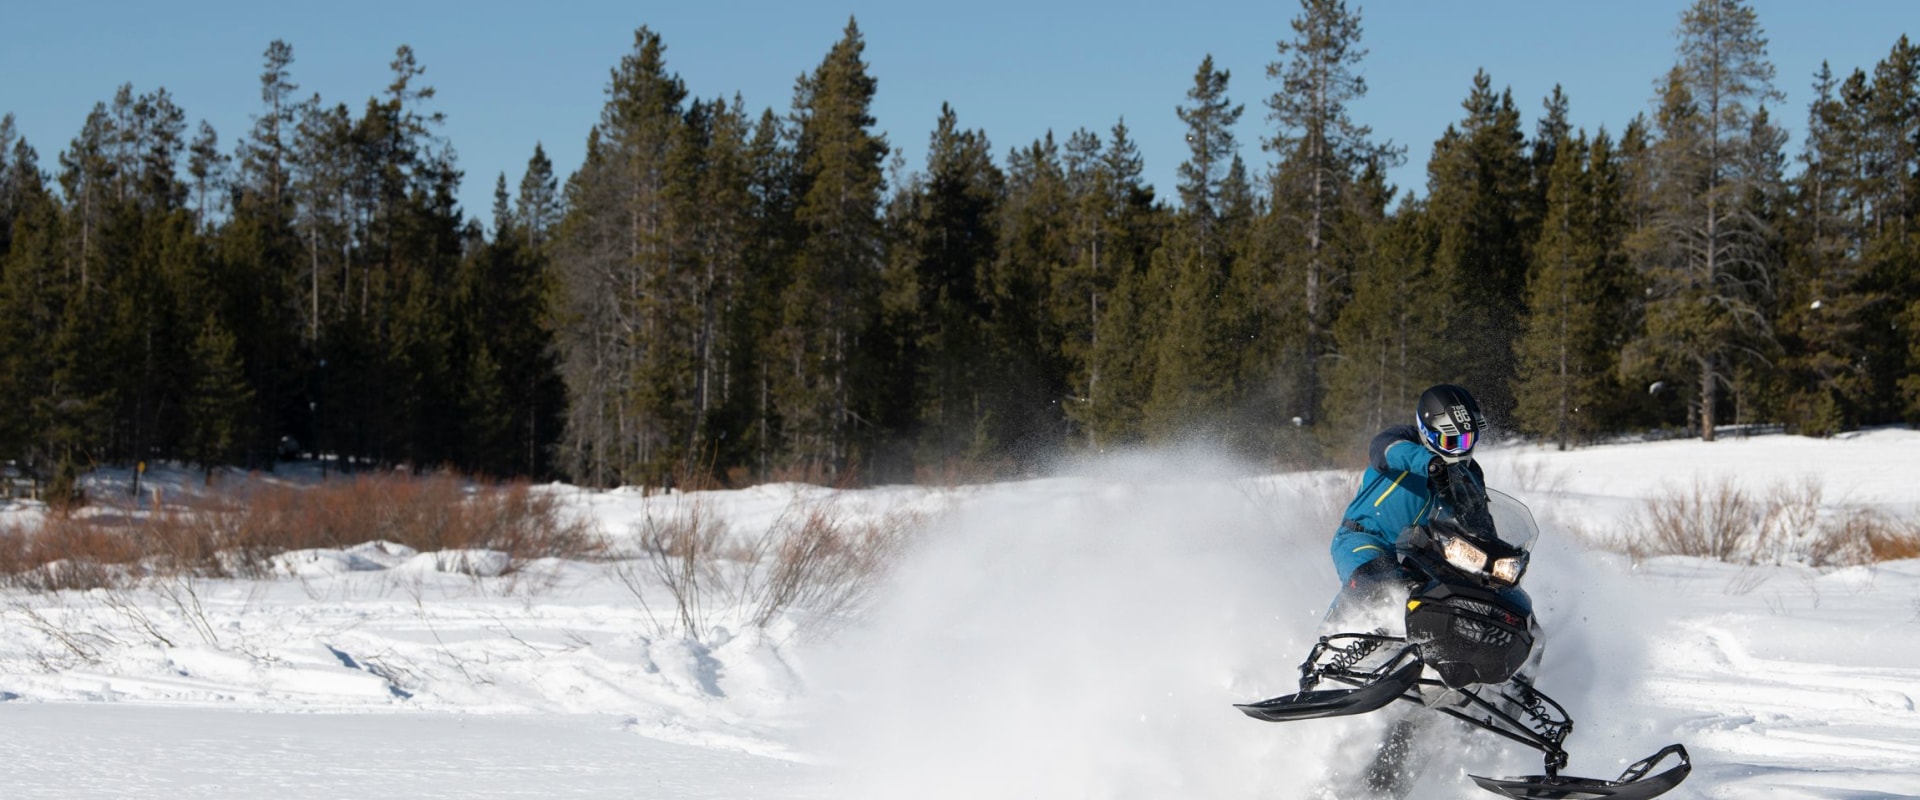 How fast can a 800cc snowmobile go?